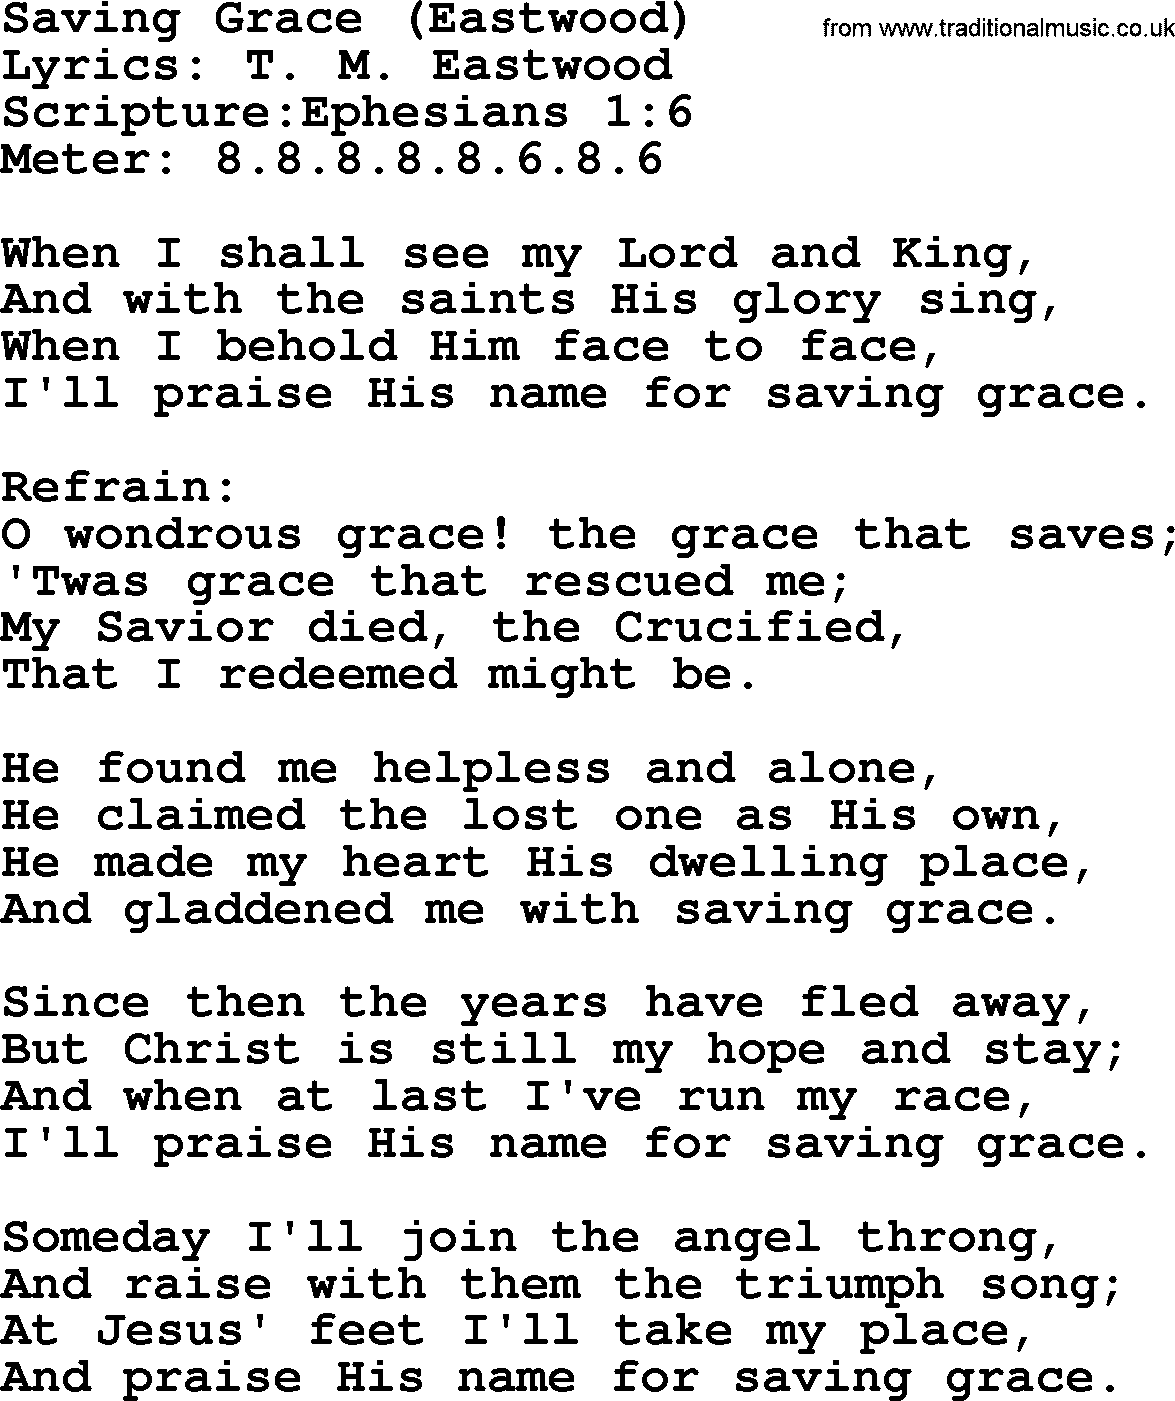 Hymns about  Angels, Hymn: Saving Grace (Eastwood), lyrics, sheet music, midi & Mp3 music with PDF